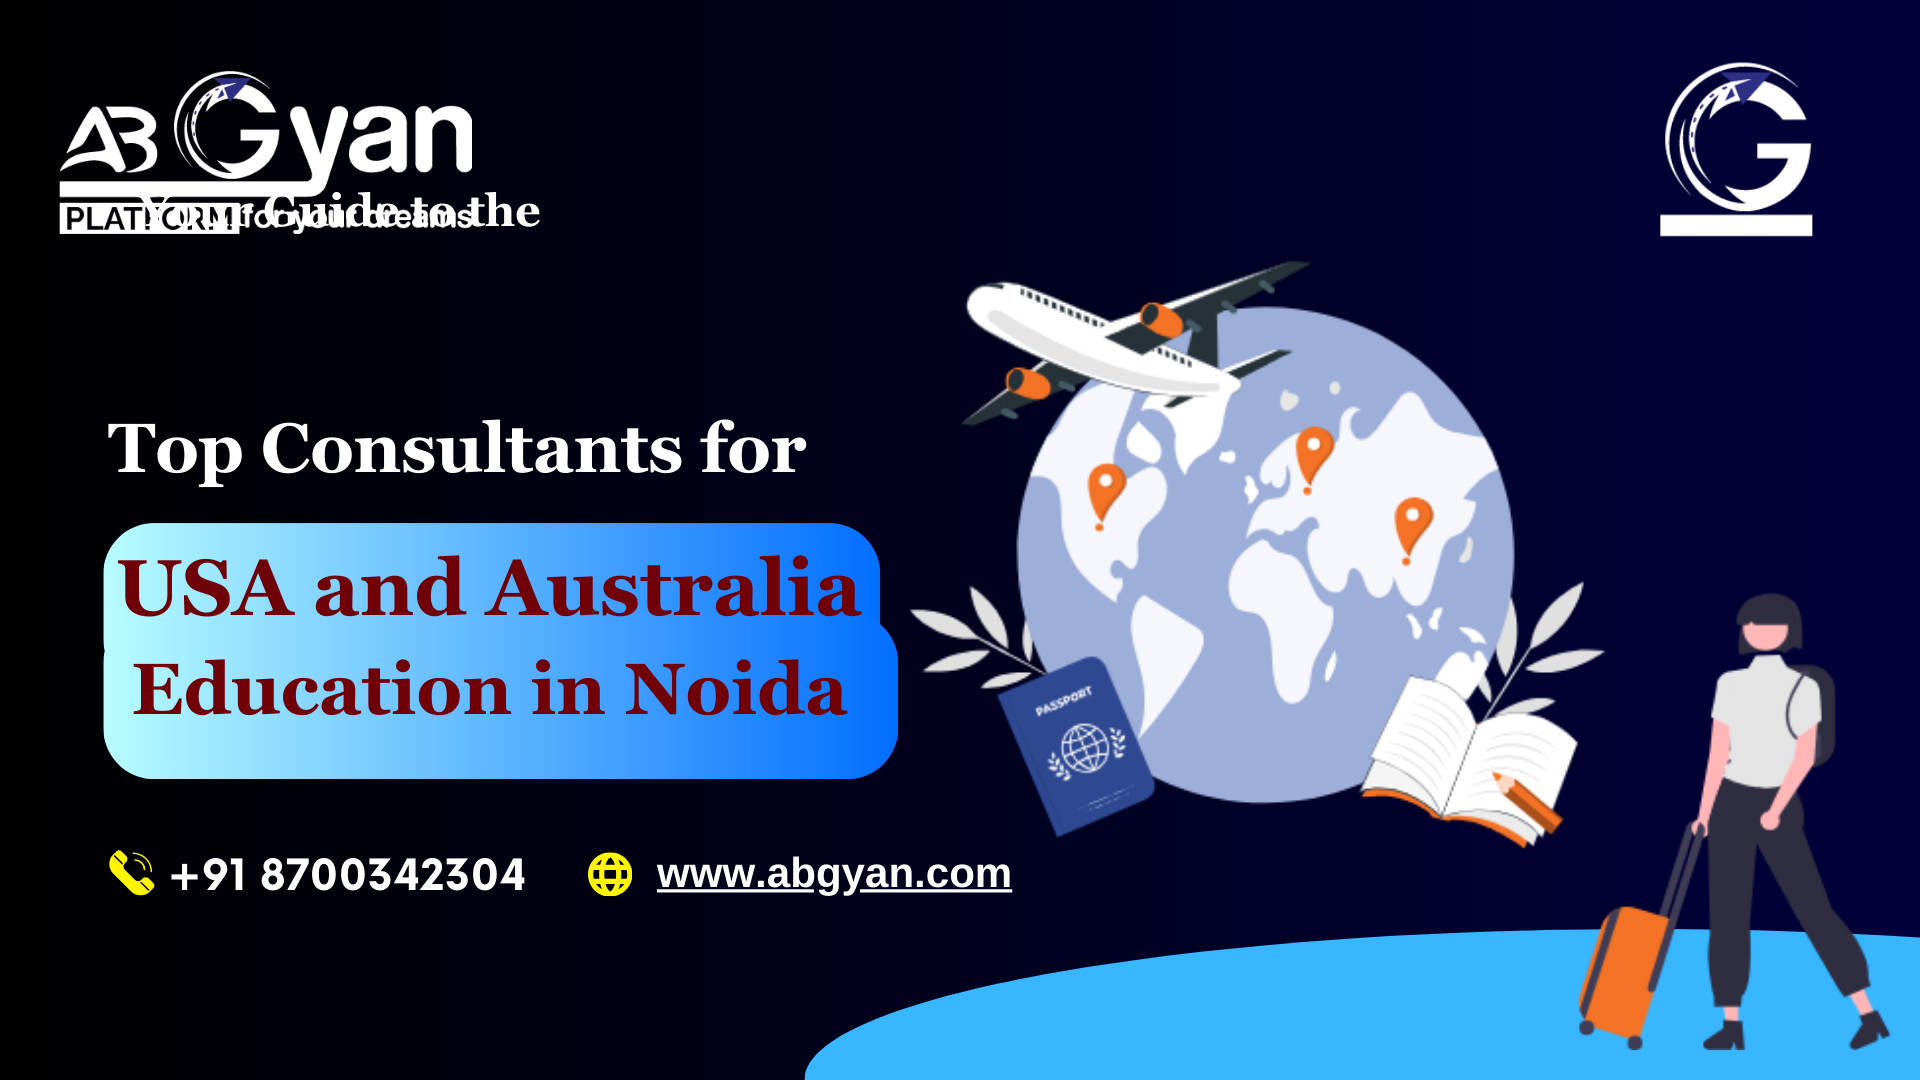 Top Consultants for USA and Australia Education in Noida | HighWeber